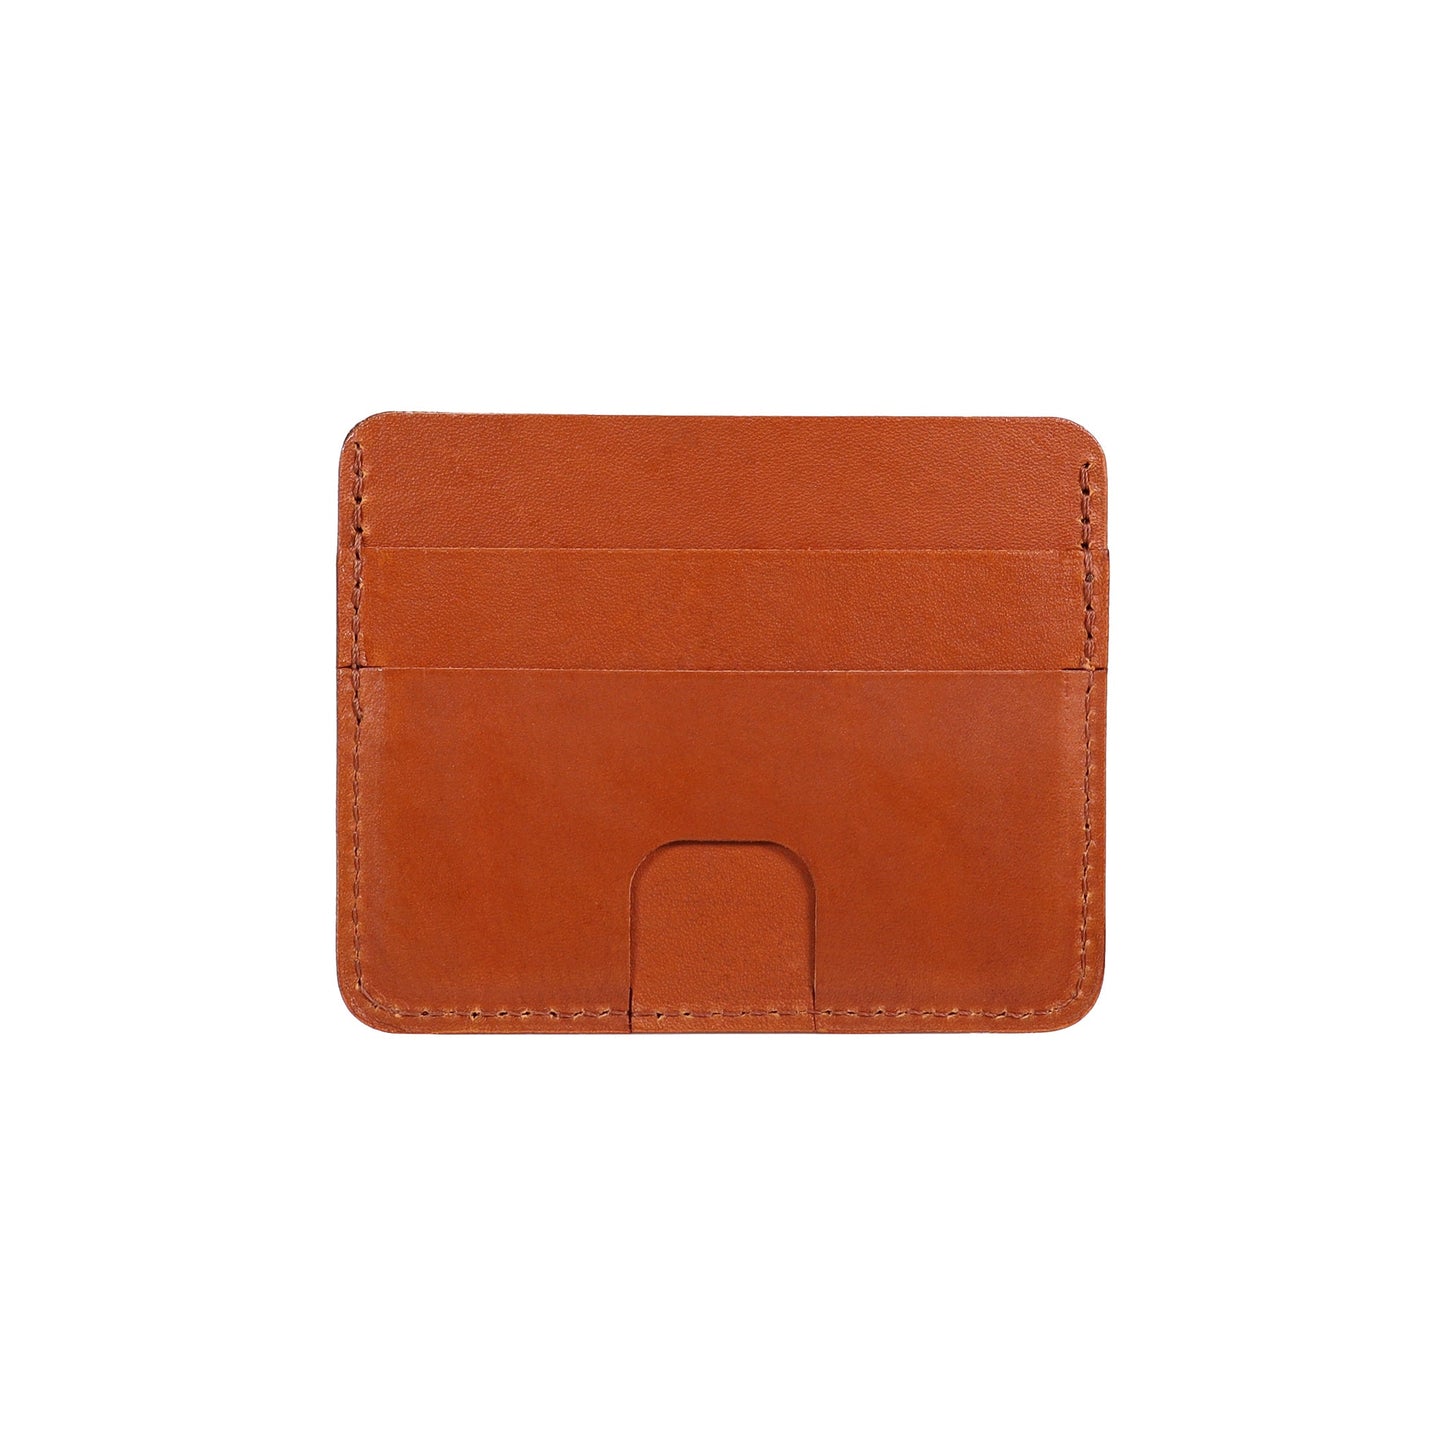 Brown Leather Card Holder Wallet